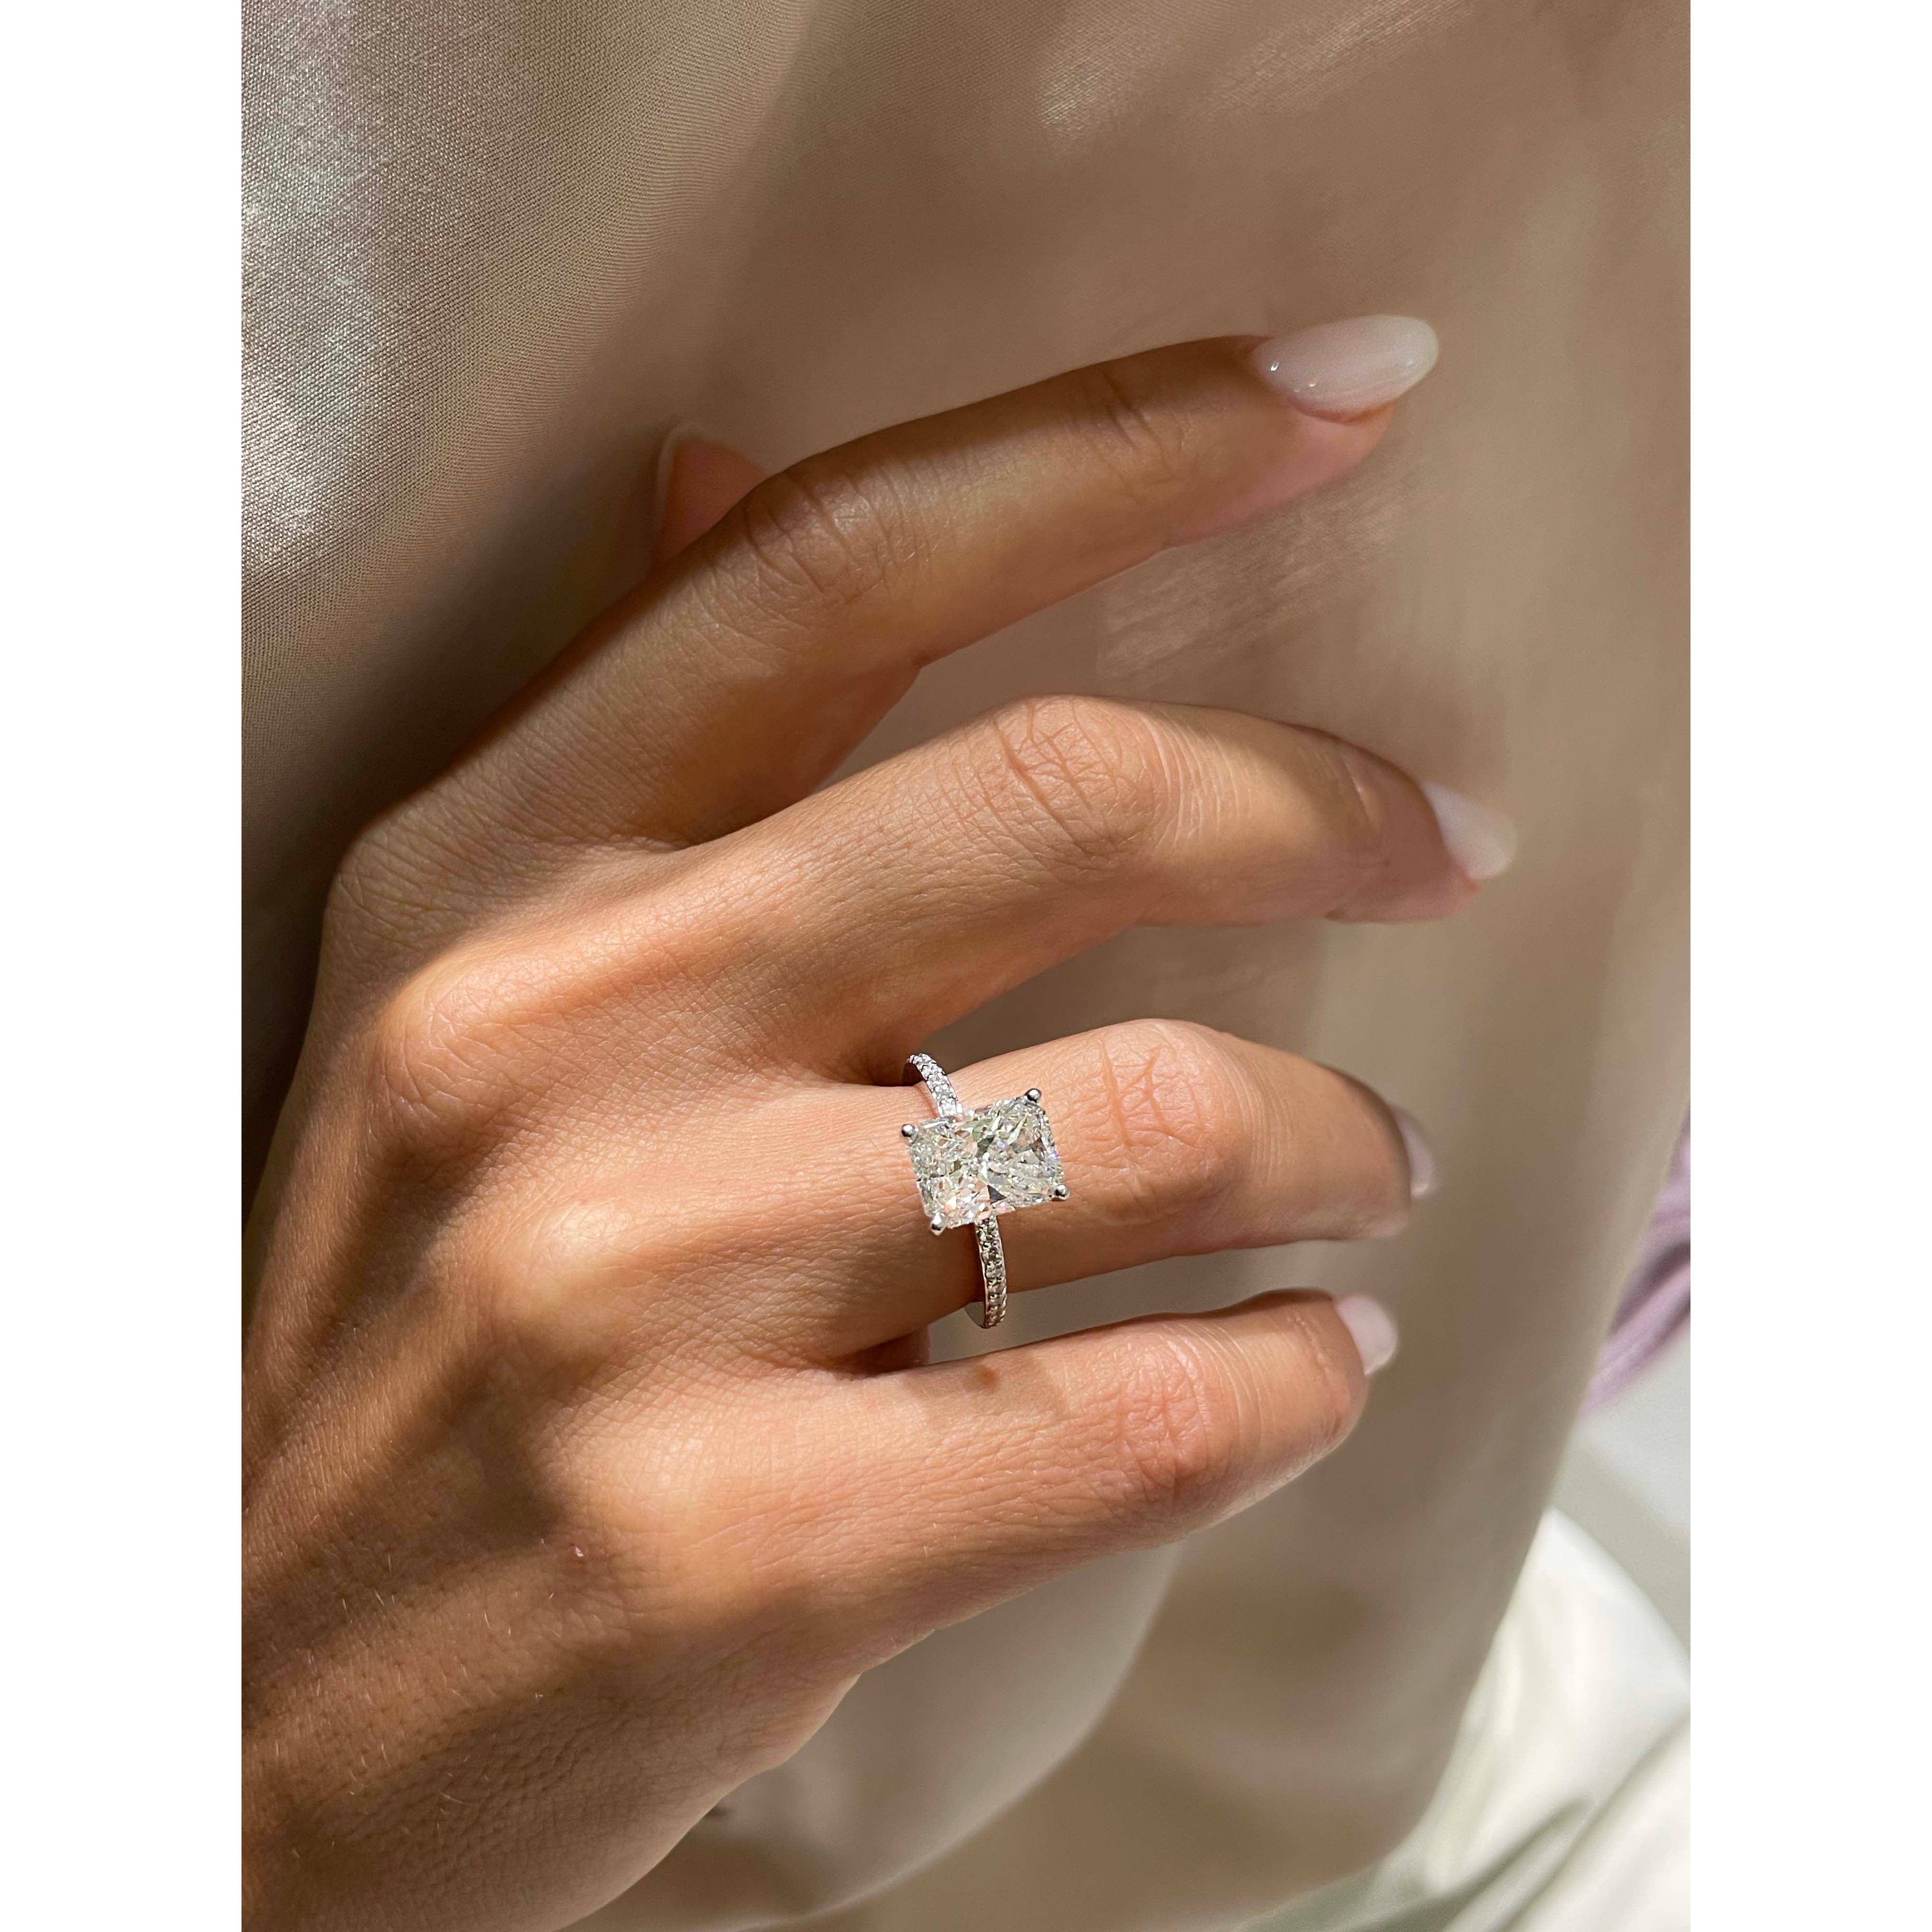 Audrey Diamond Engagement Ring   (3.5 Carat) -Platinum